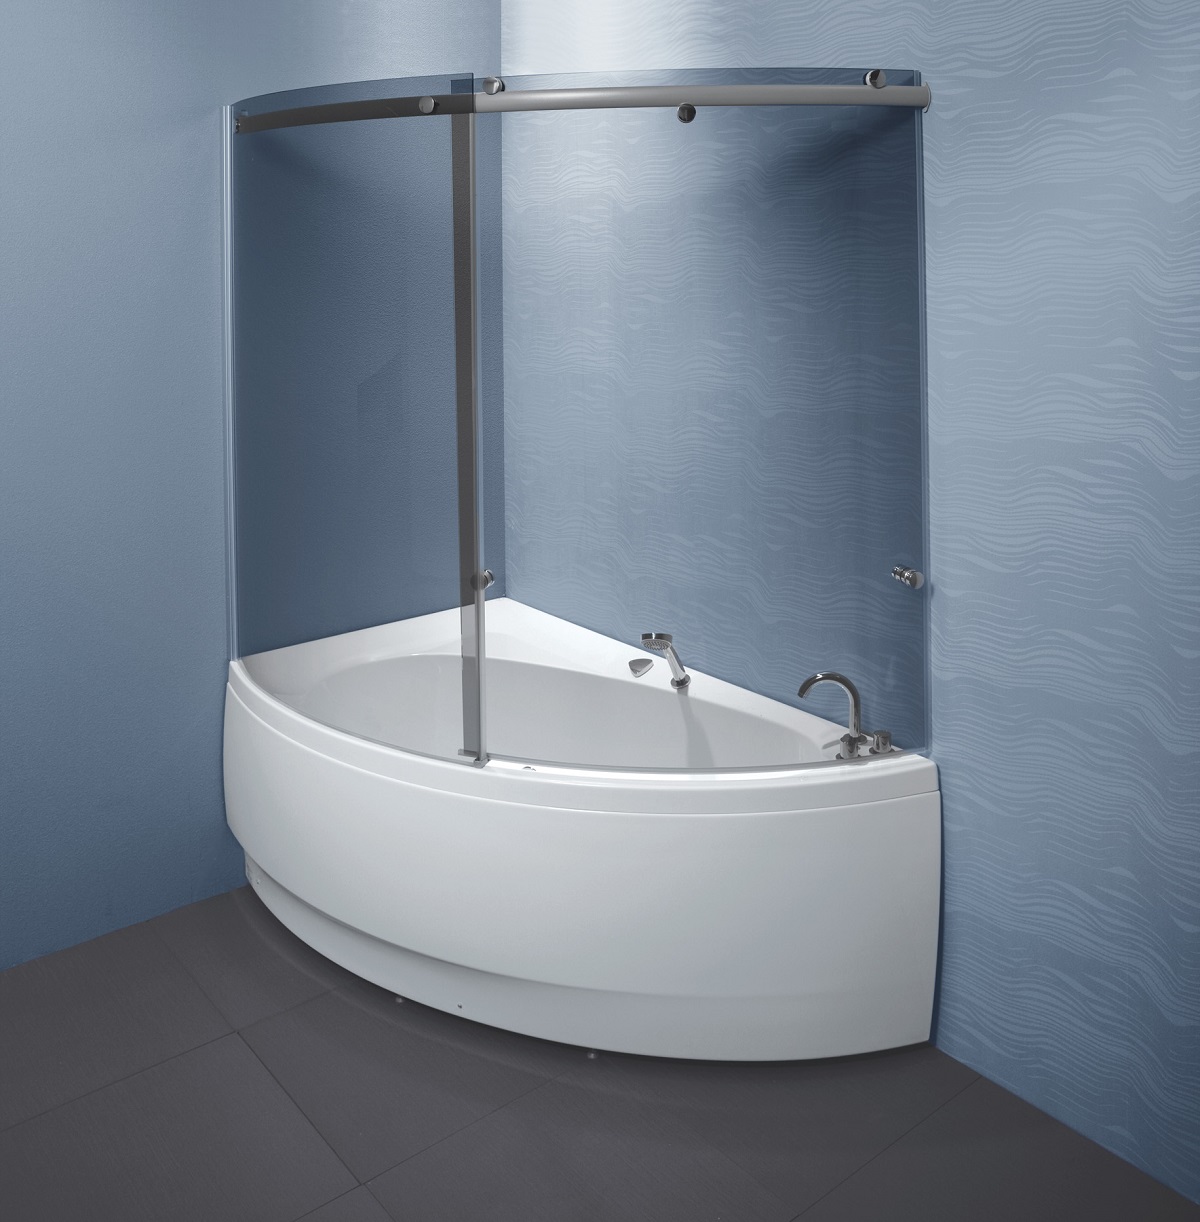 Bath Tub Shower Combo, Bathtub And Shower Combo Kit